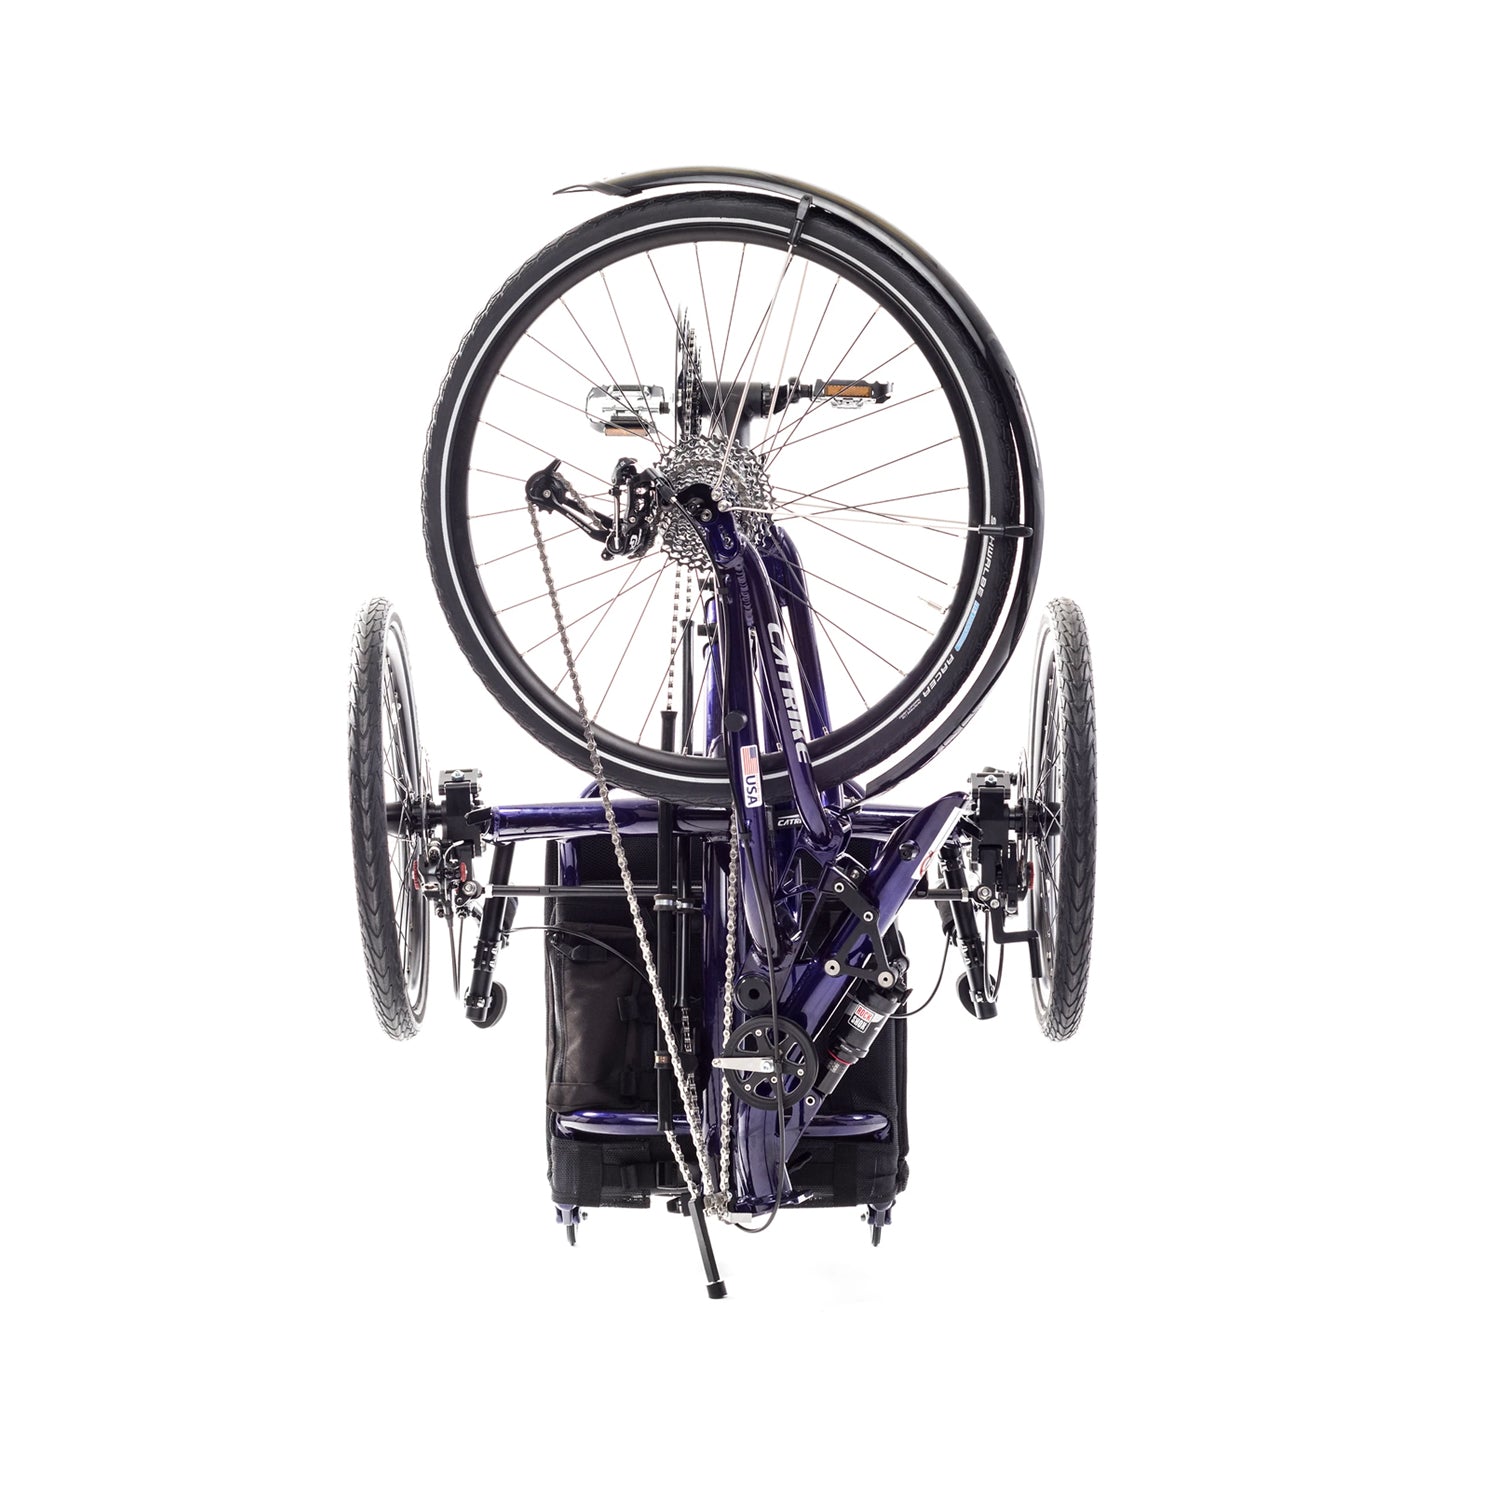 Catrike Dumont Trike Candy Purple folded, Bixby Bicycles, Oklahoma